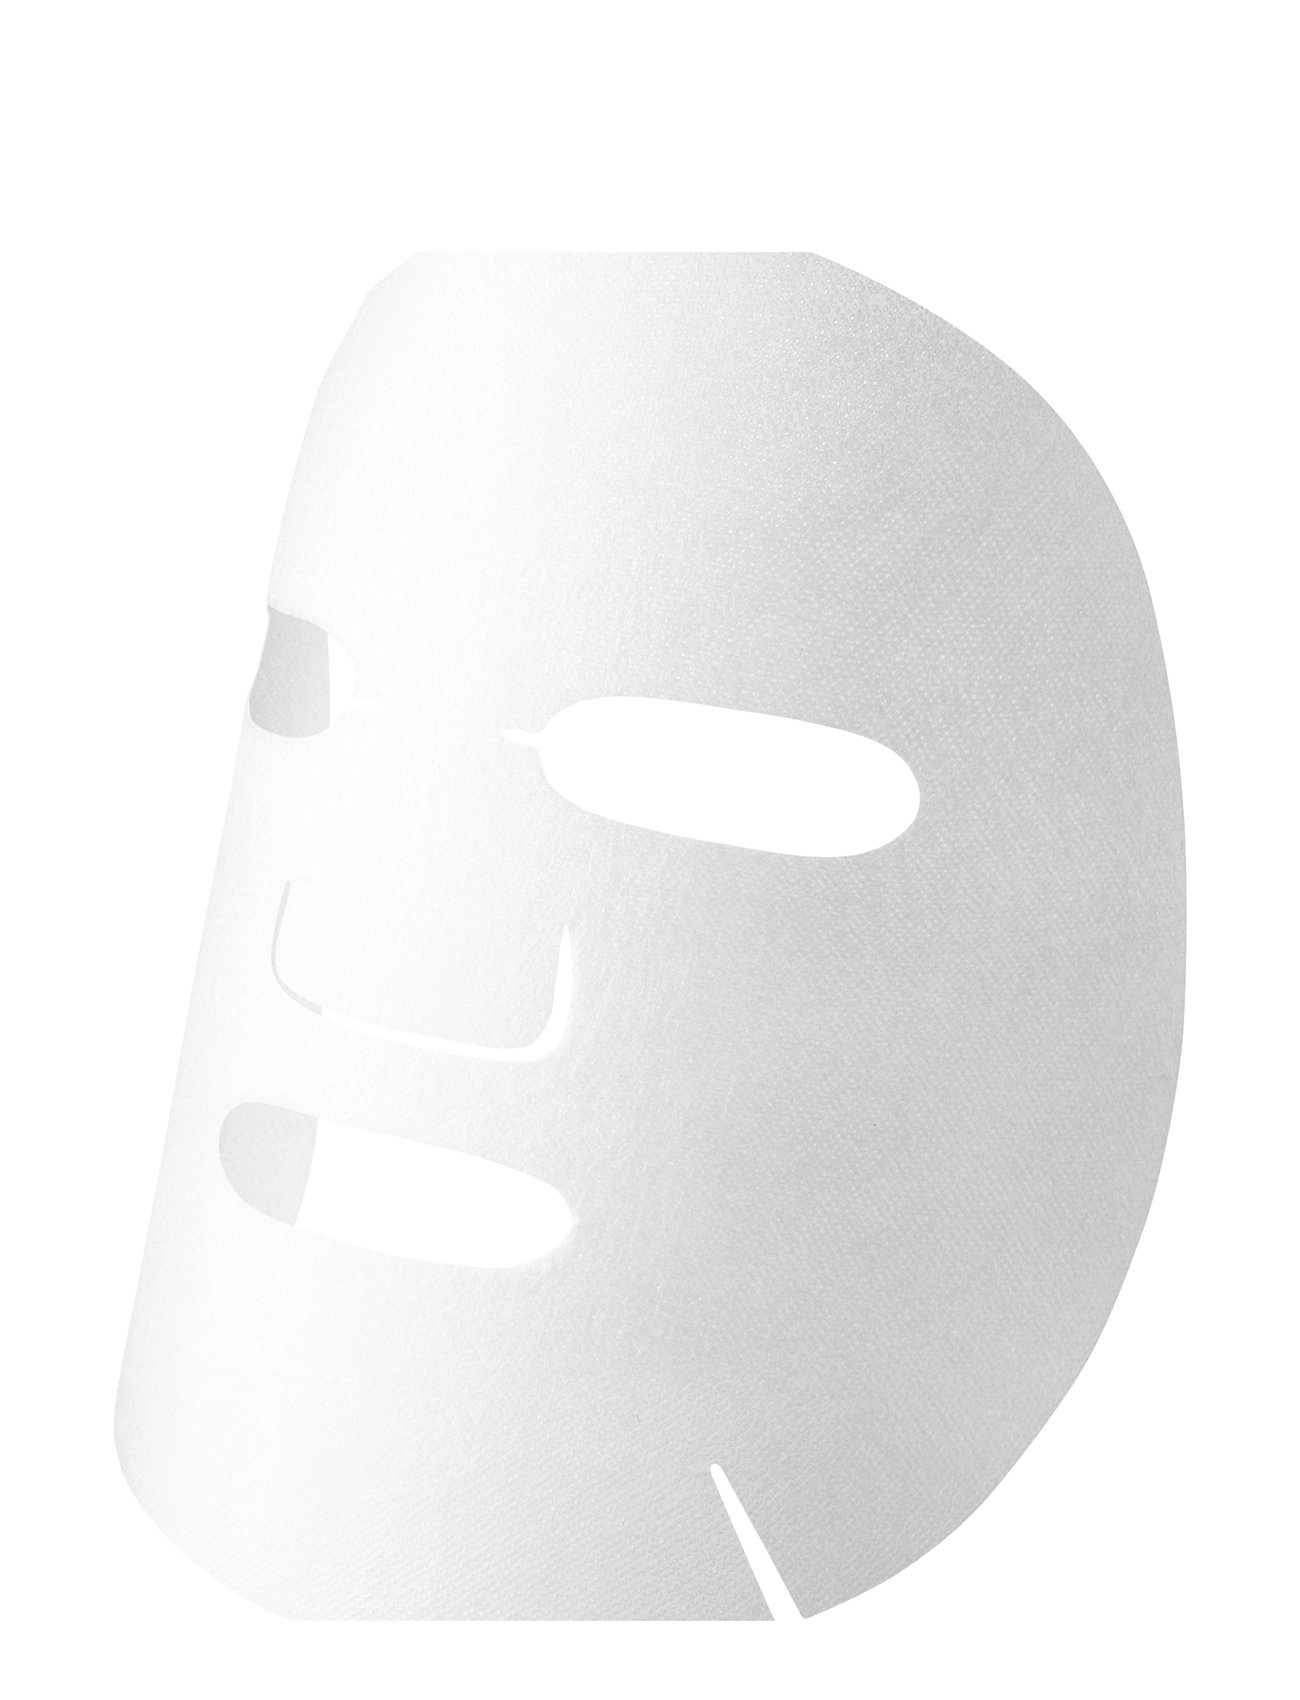 Natural Vitamin 21.5% Enhancing Sheet Mask Beauty Women Skin Care Face Masks Sheetmask White By Wishtrend